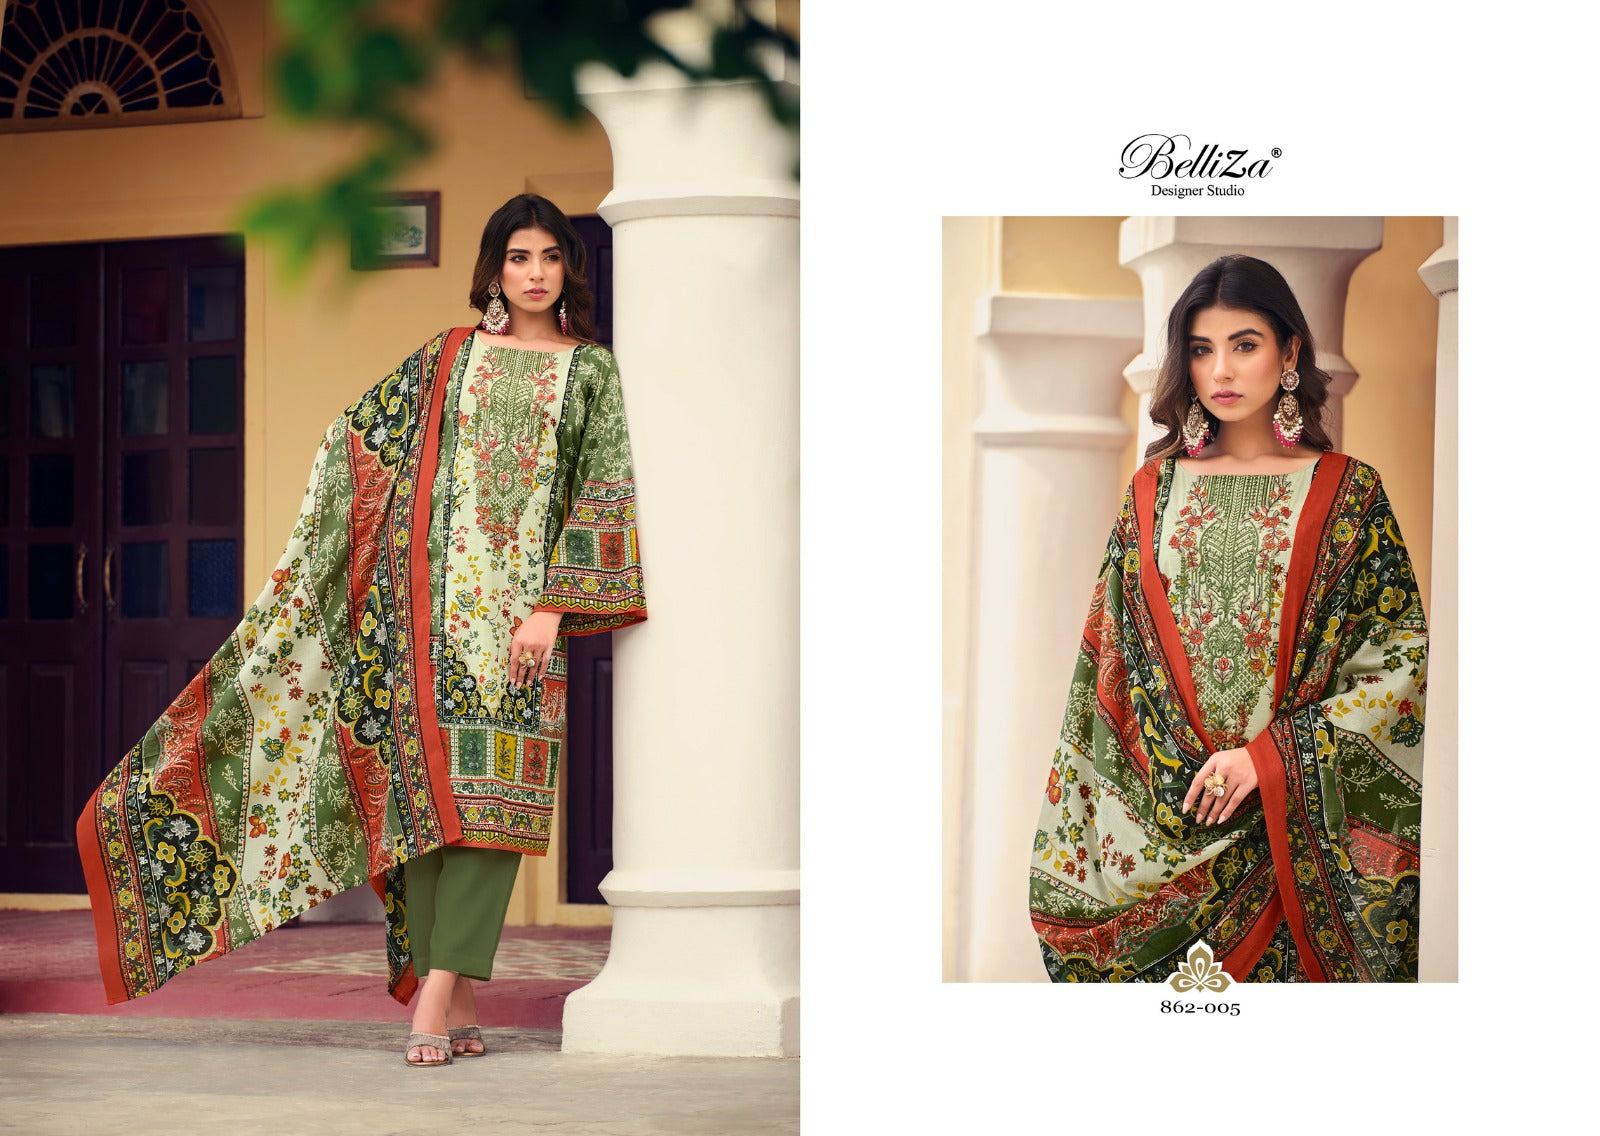 Naira Vol 25 Belliza Designer Studio Cotton Karachi Salwar Suits